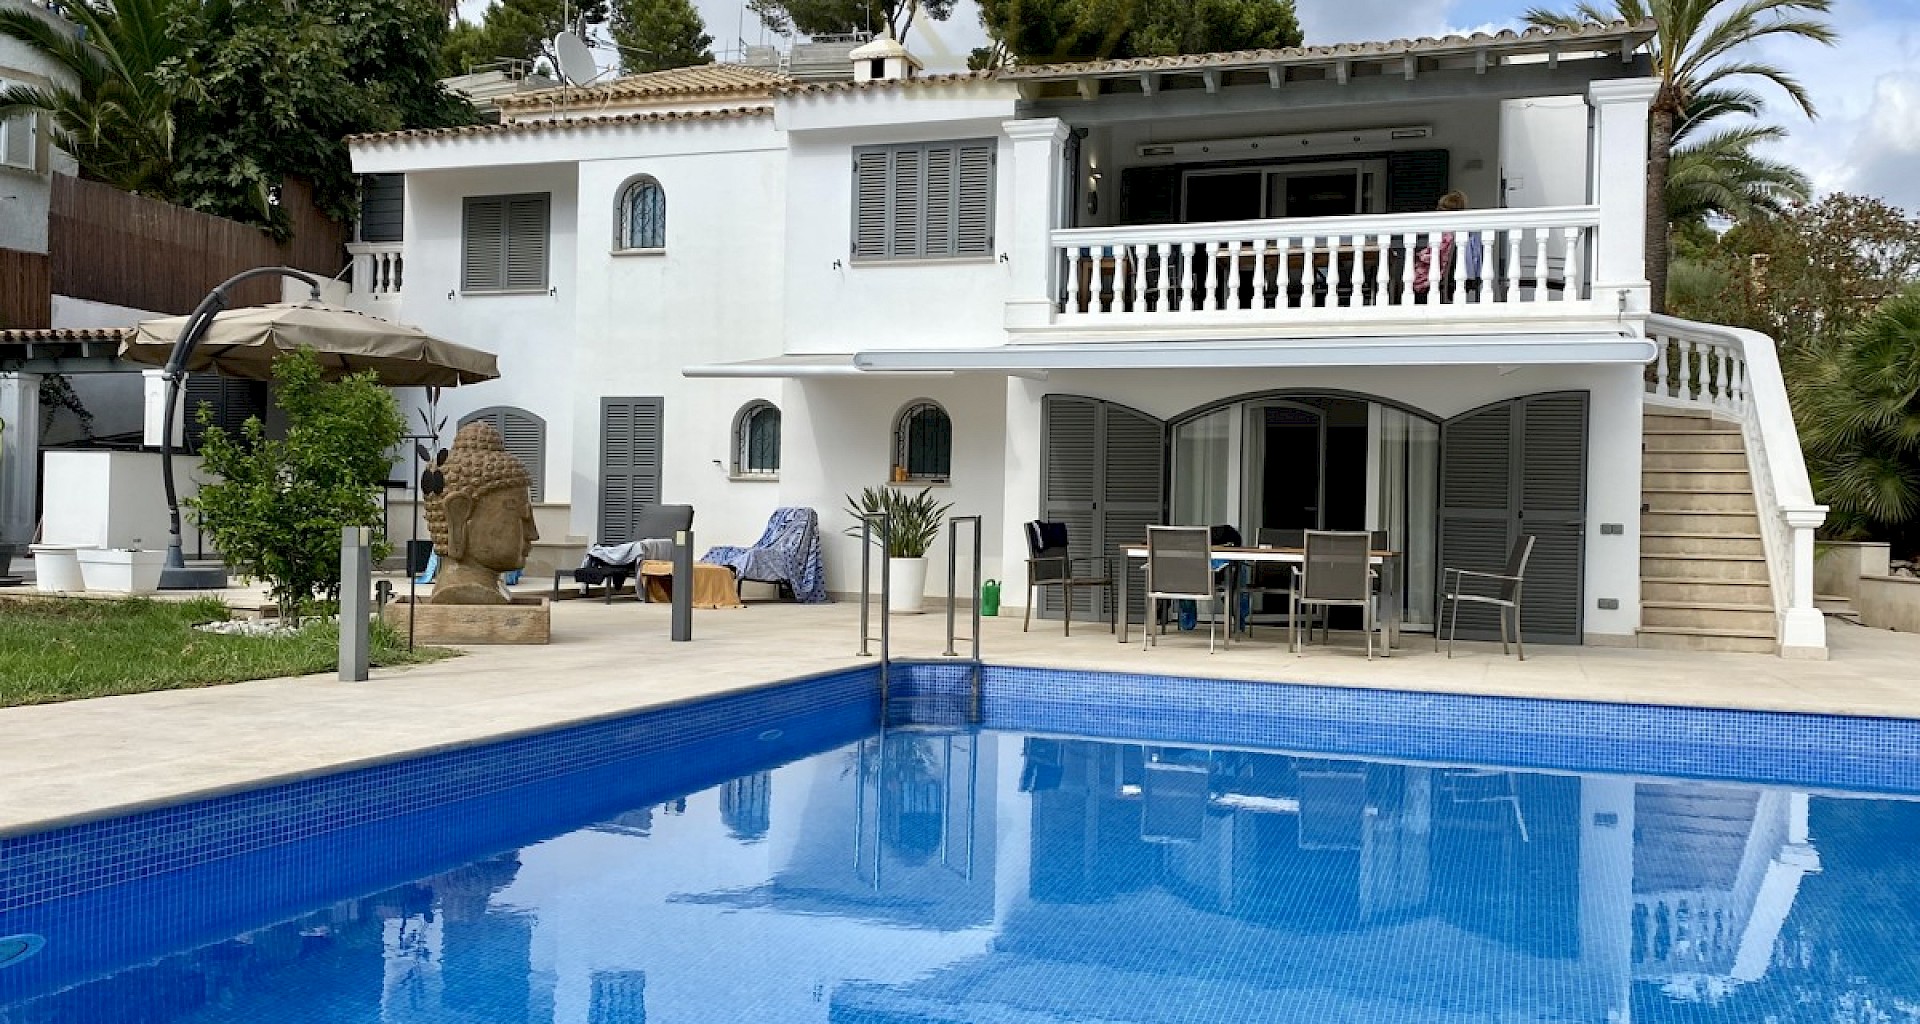 KROHN & LUEDEMANN Beautiful Villa in Costa de la Calma on a flat plot with garden and big pool in Southwest Mallorca 